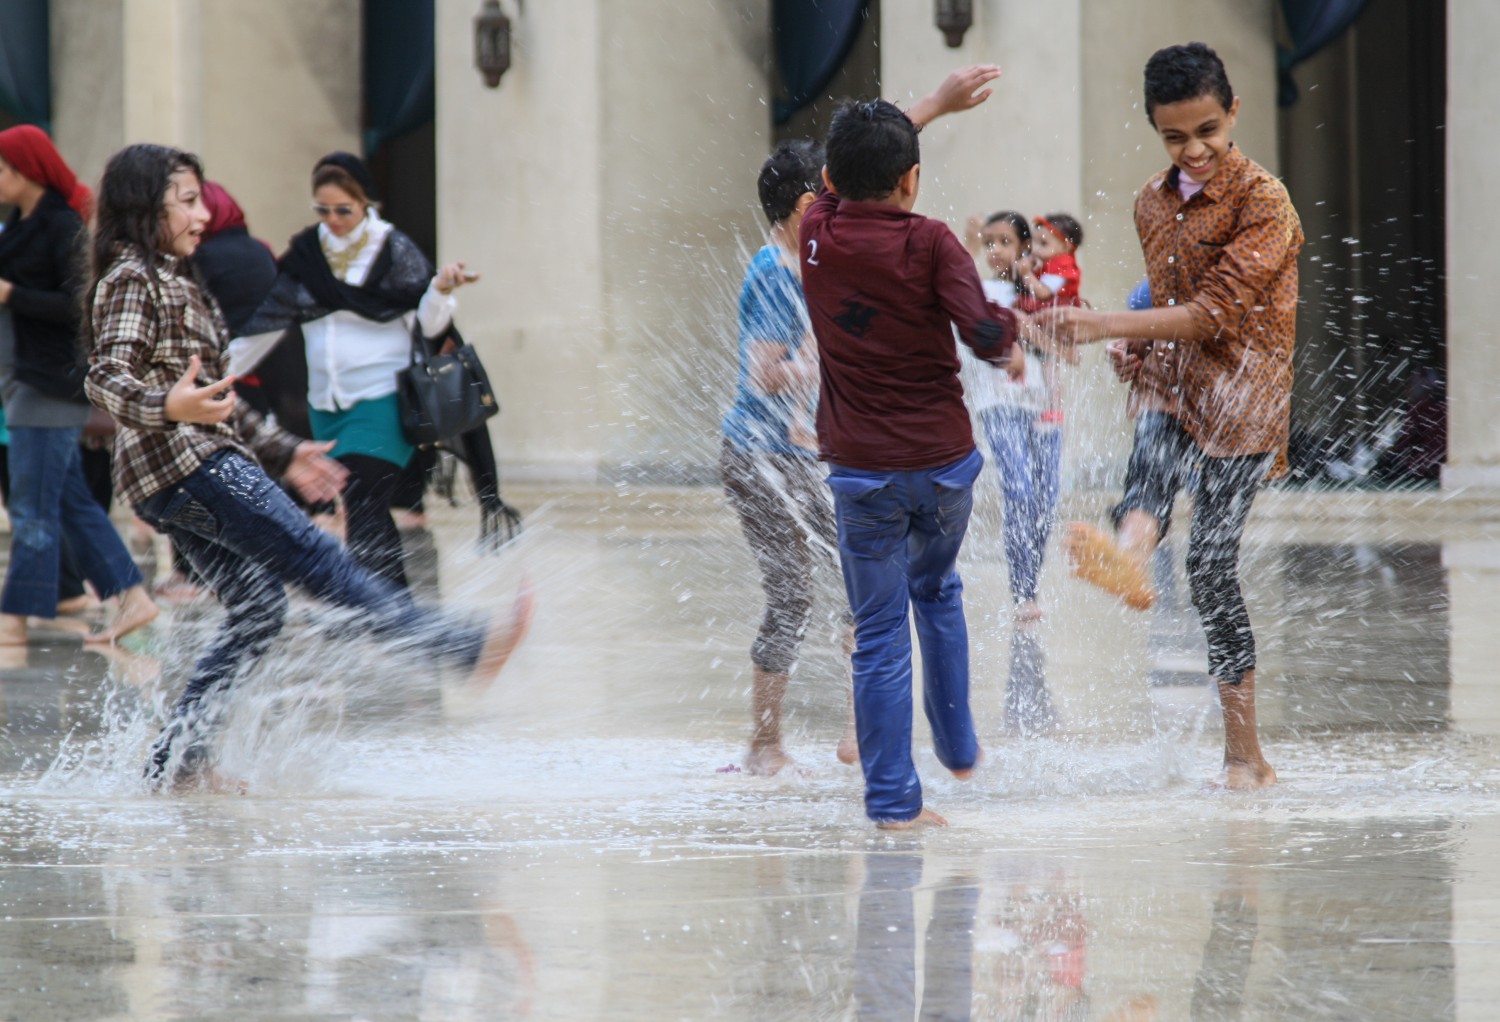 Children splashing water in the vast hall of al-Hakim mosque in Cairo after heavy rains. Credit: Enas El Masry